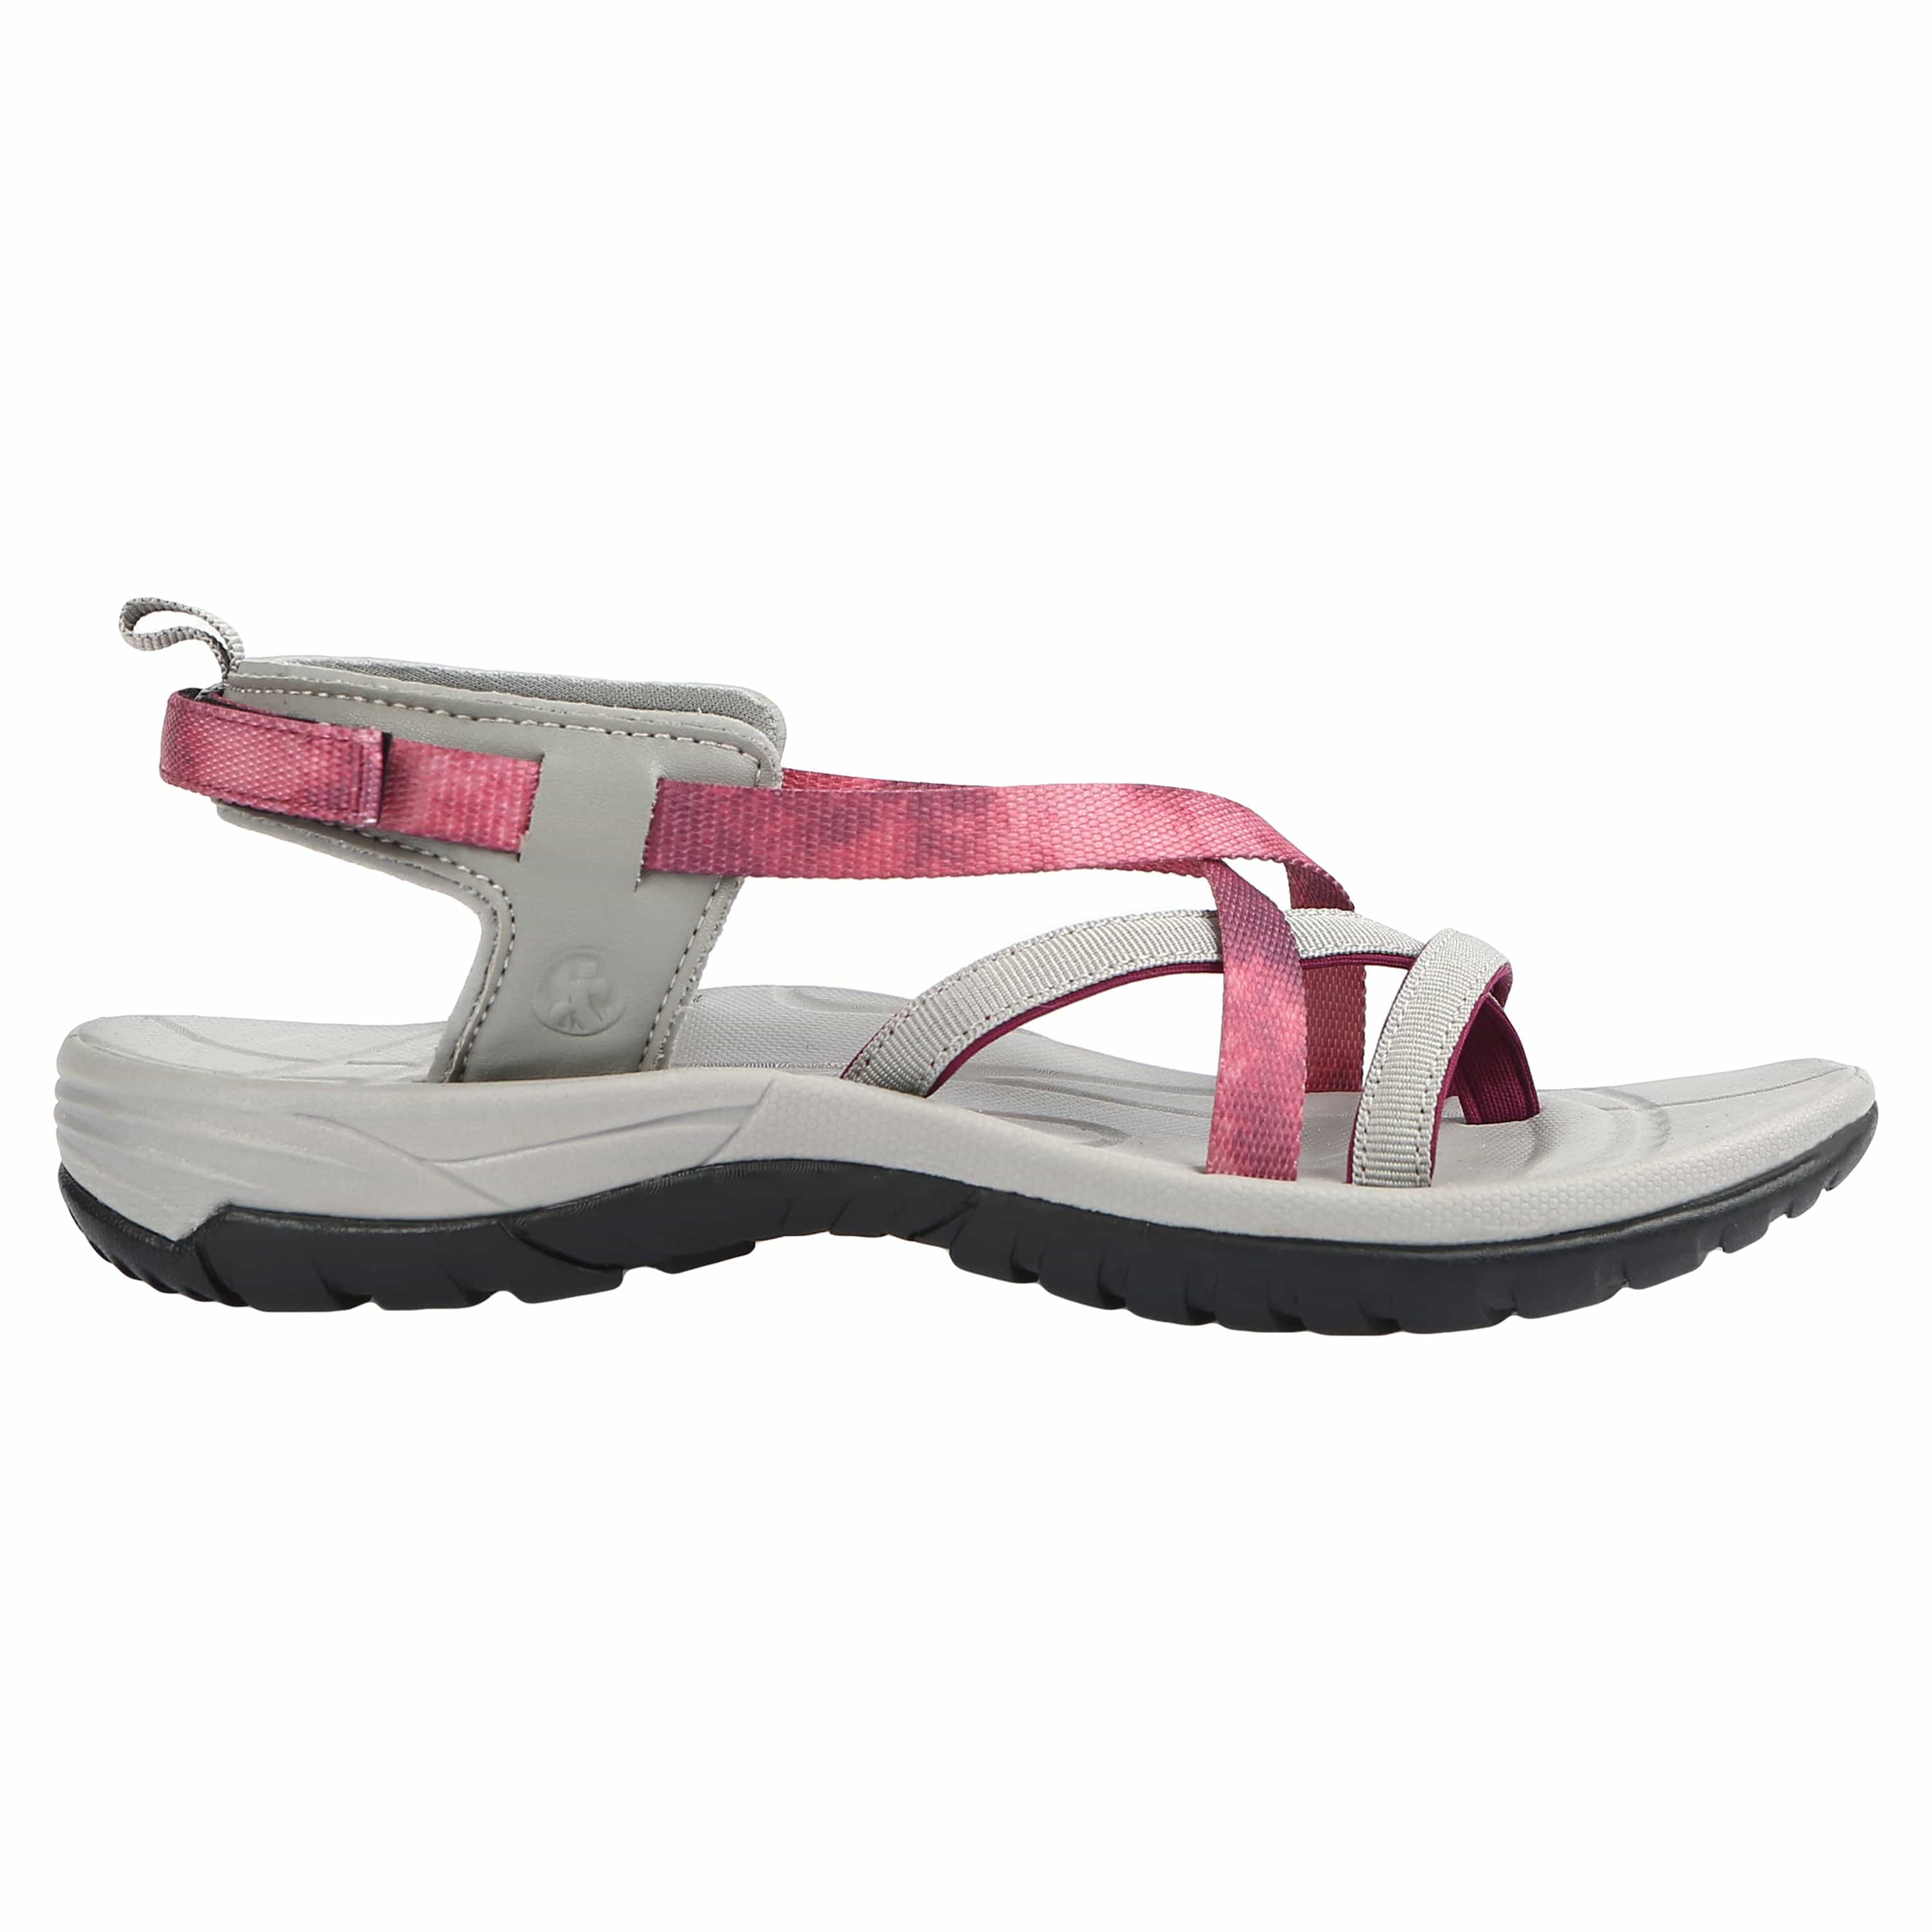 DECATHLON QUECHUA GIRLS Sandals Size 36-37 £4.99 - PicClick UK